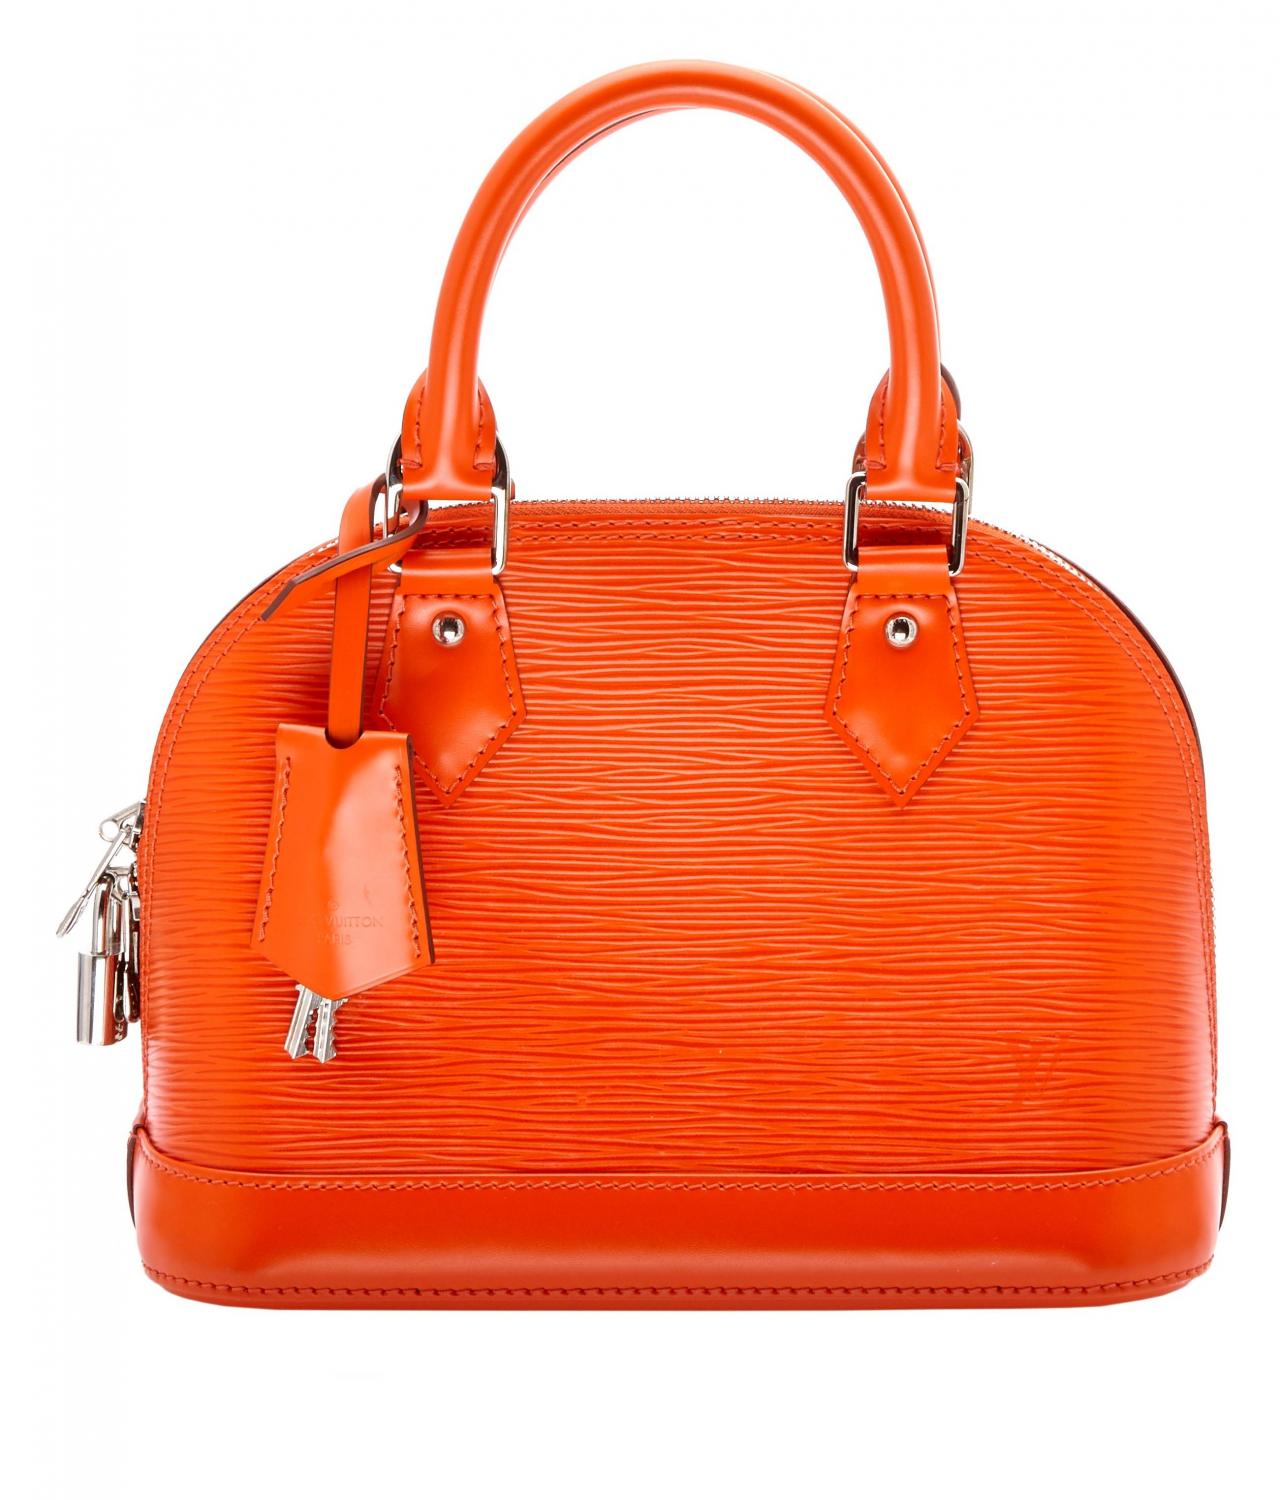 Louis Vuitton Alma Handbag - Price Estimate: $800 - $1000